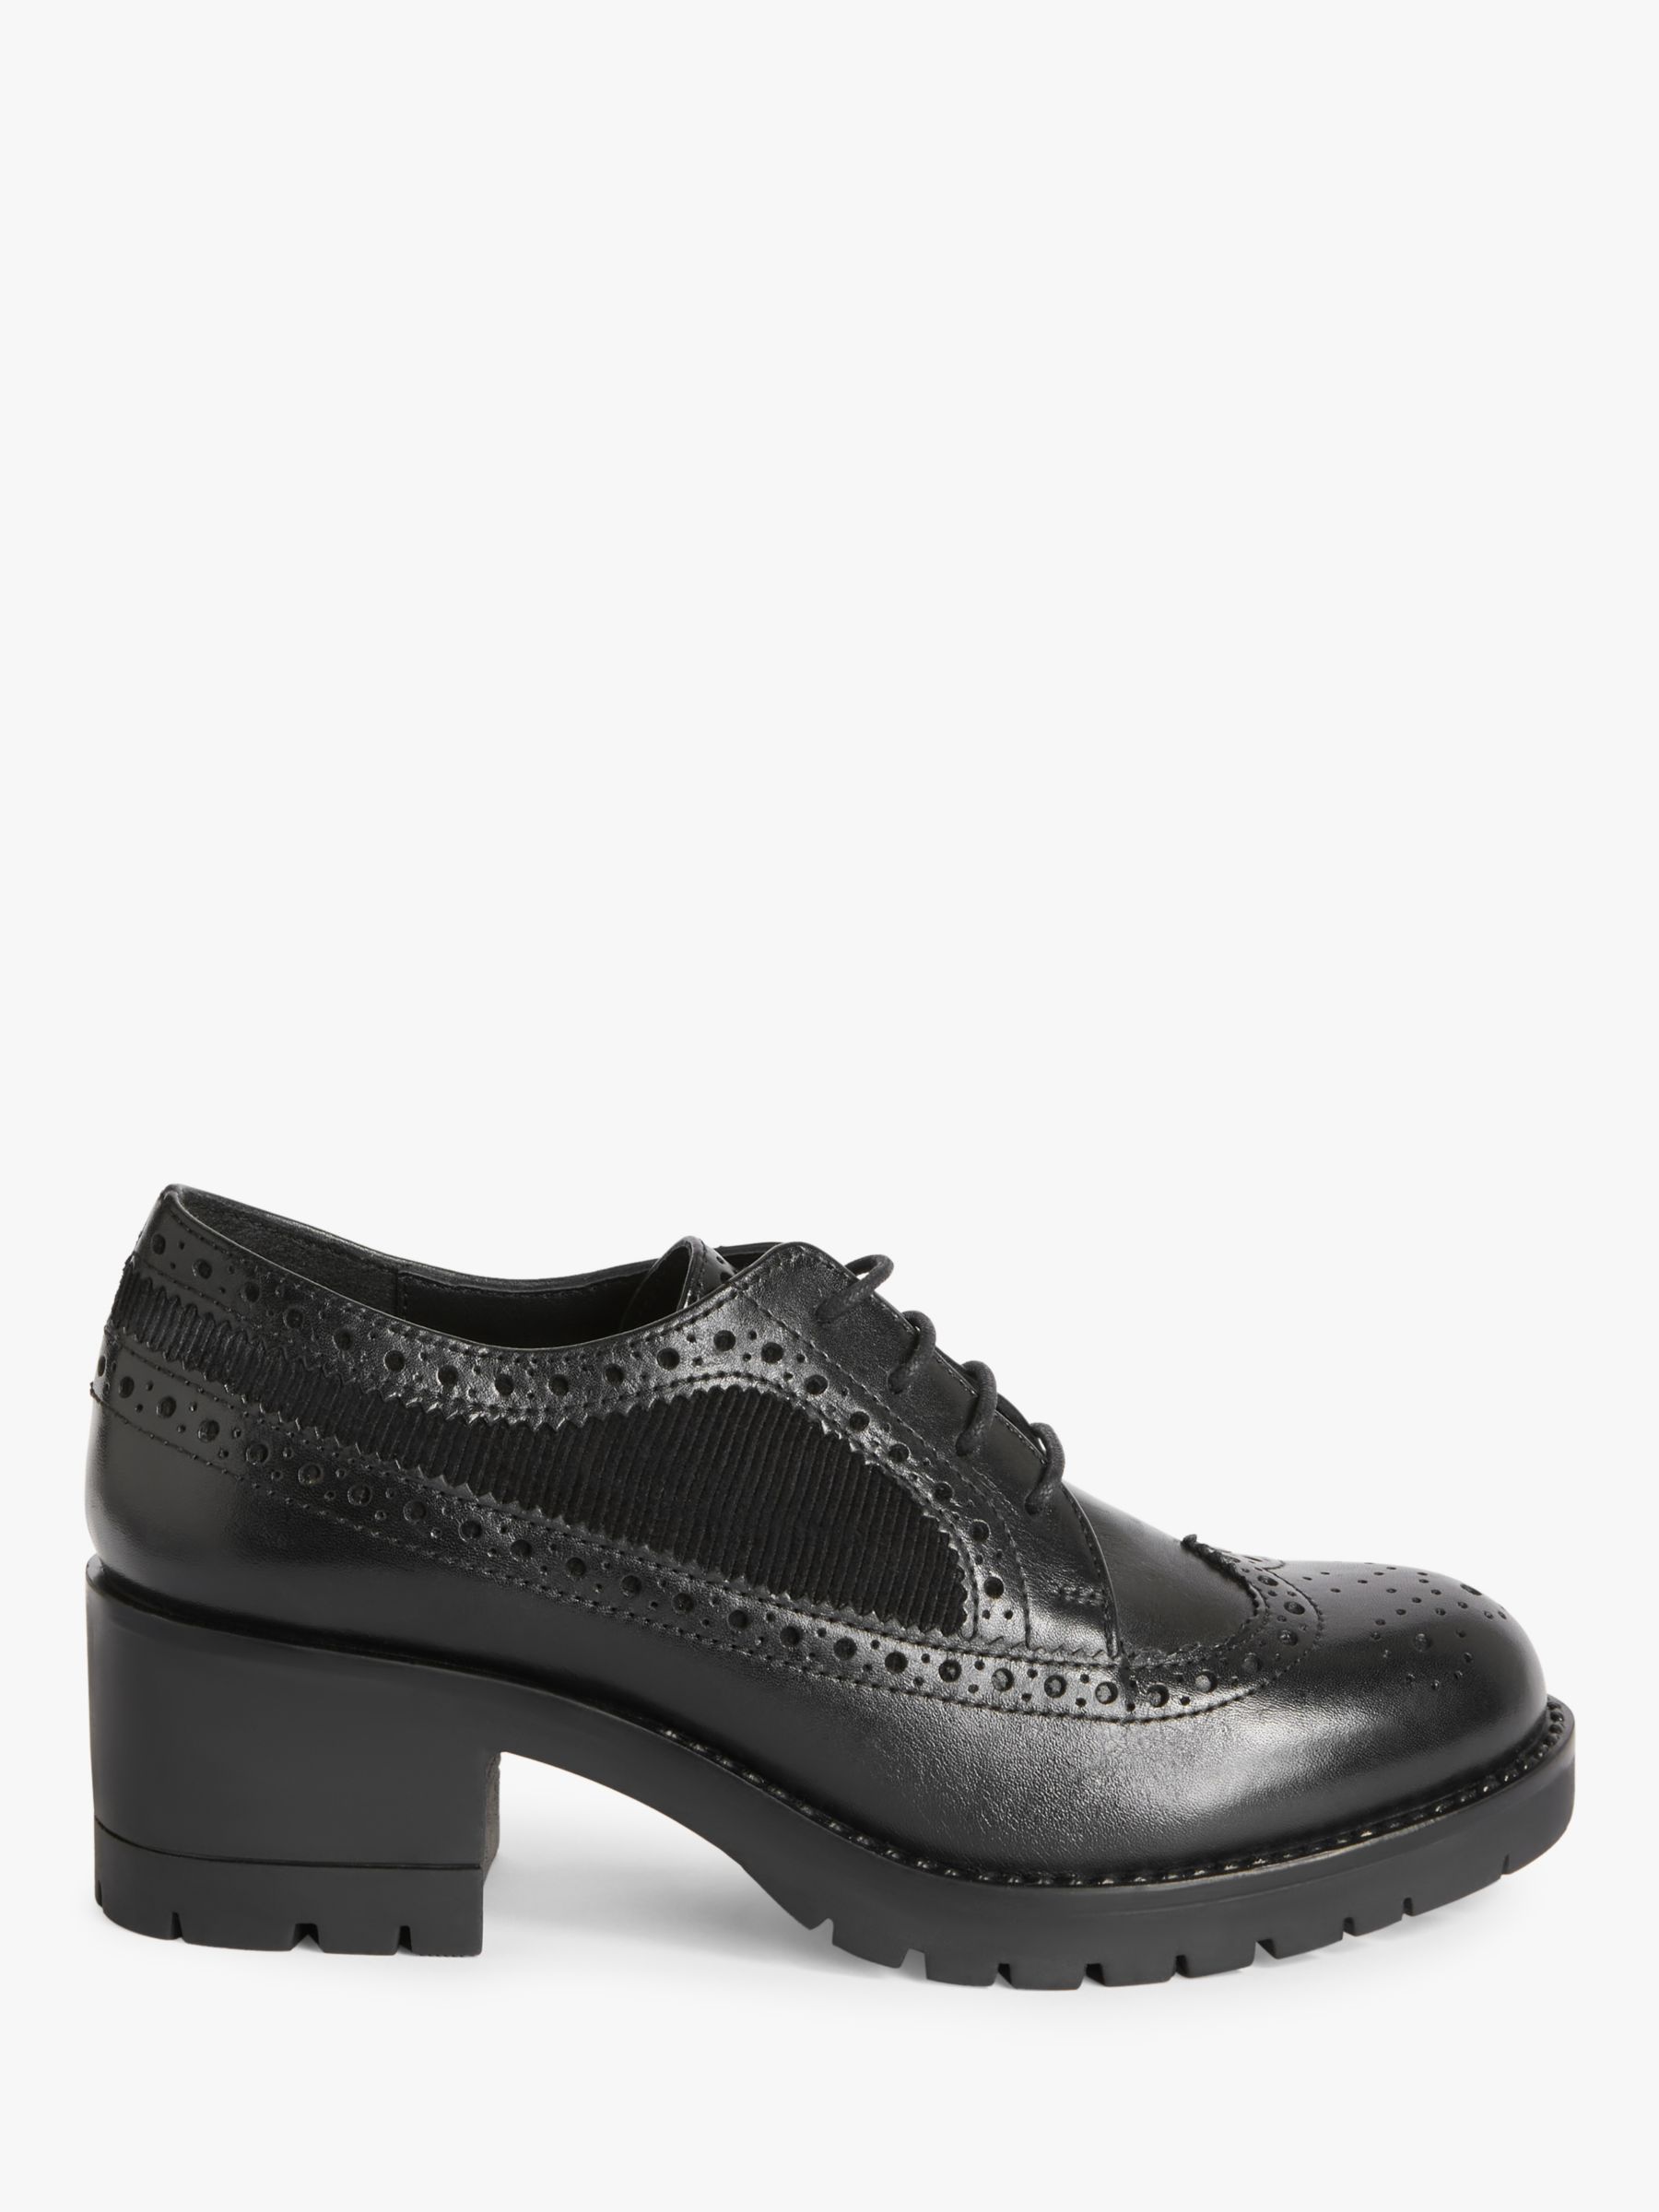 John Lewis & Partners Flavia Leather Heeled Brogue Shoes, Black at John ...